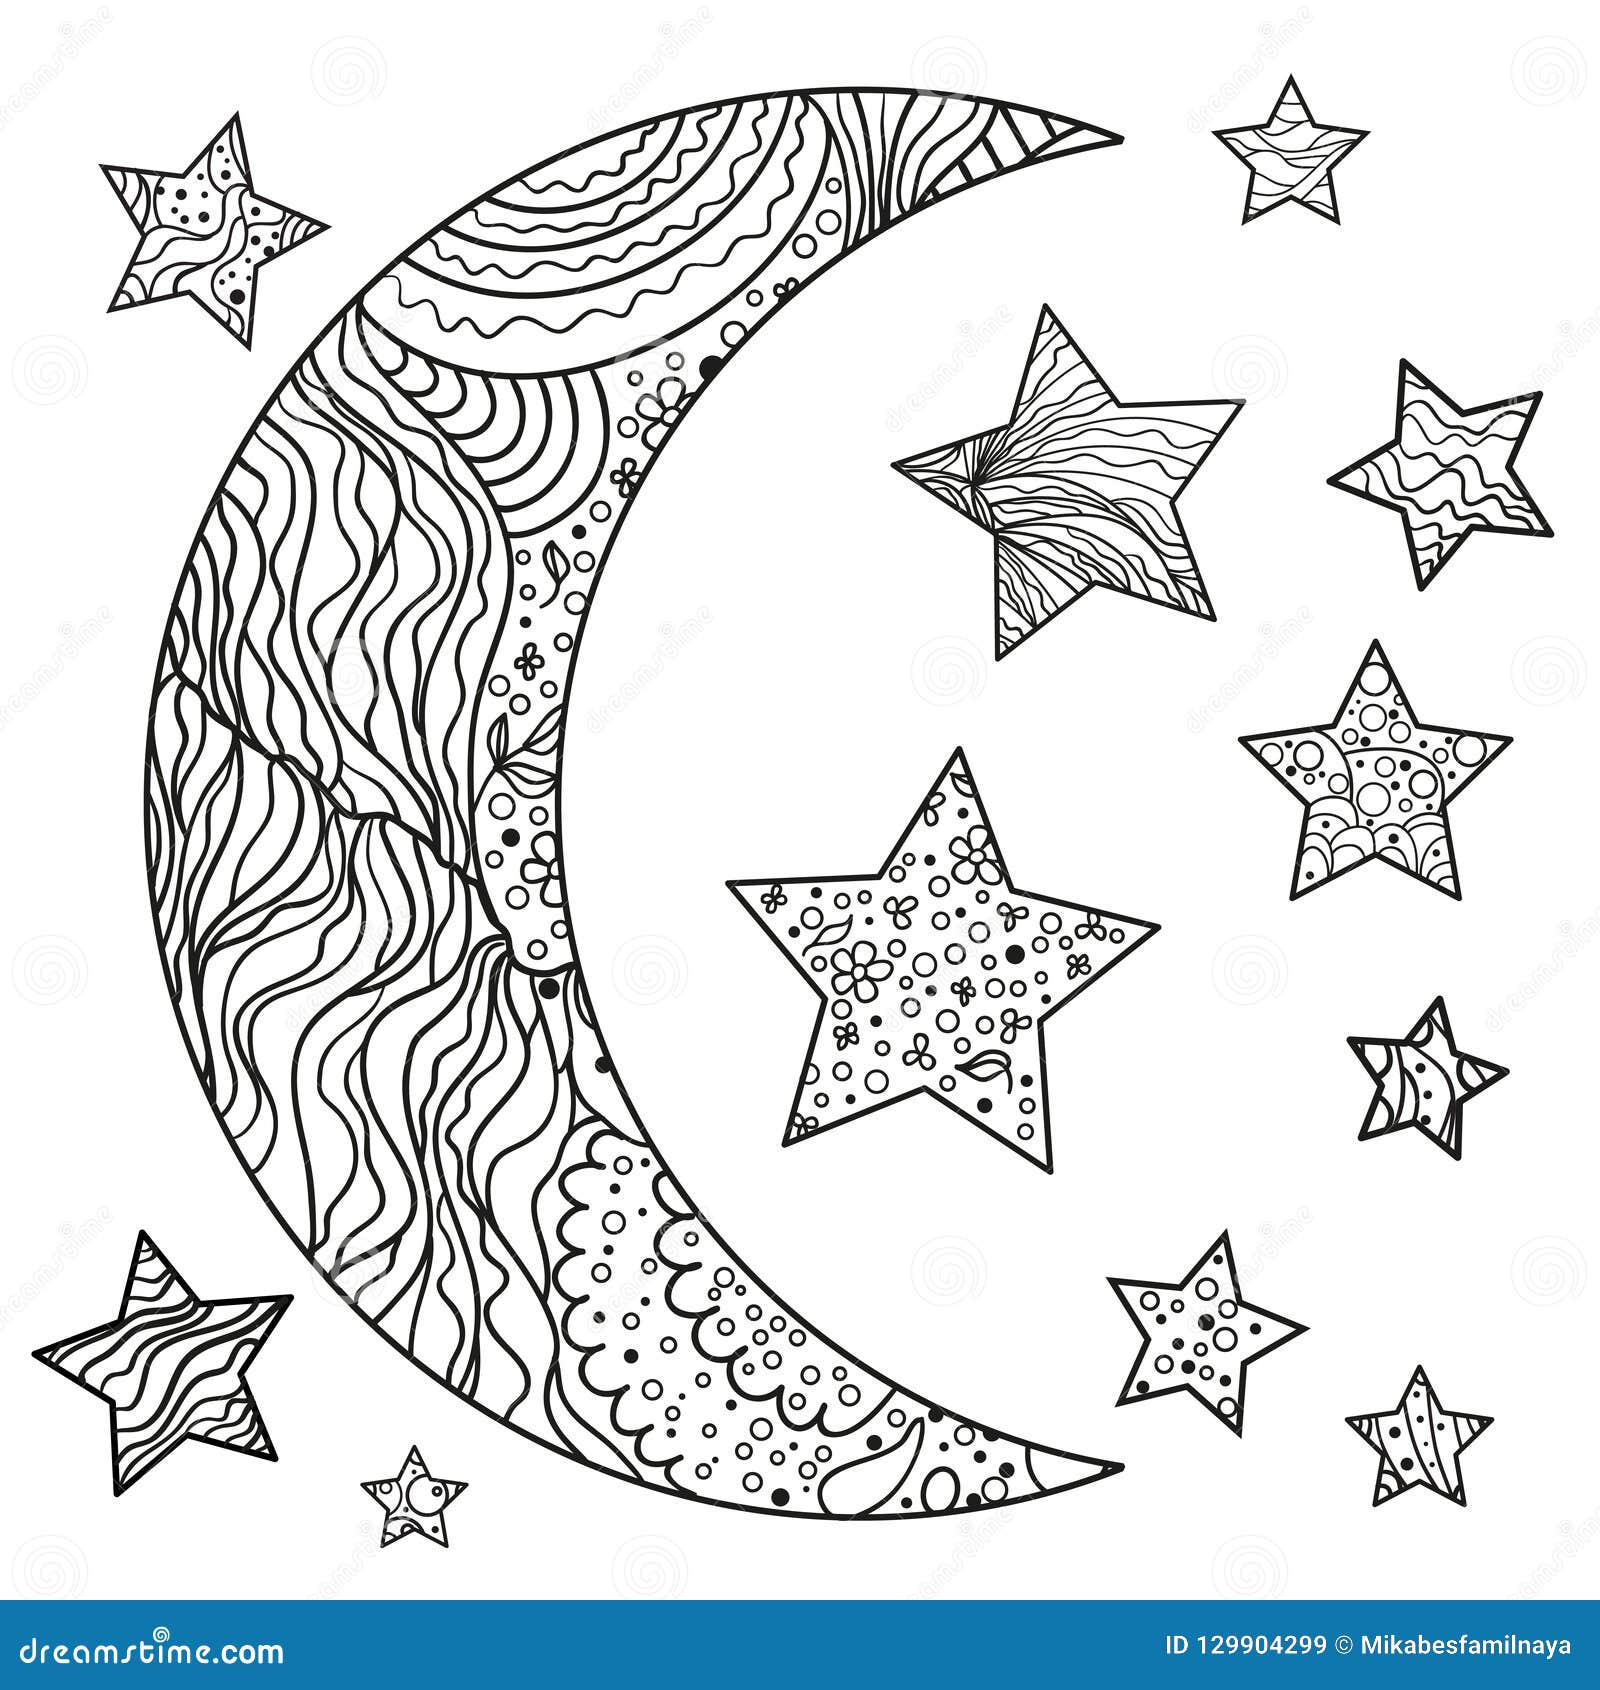 Moon and stars zentangle decal